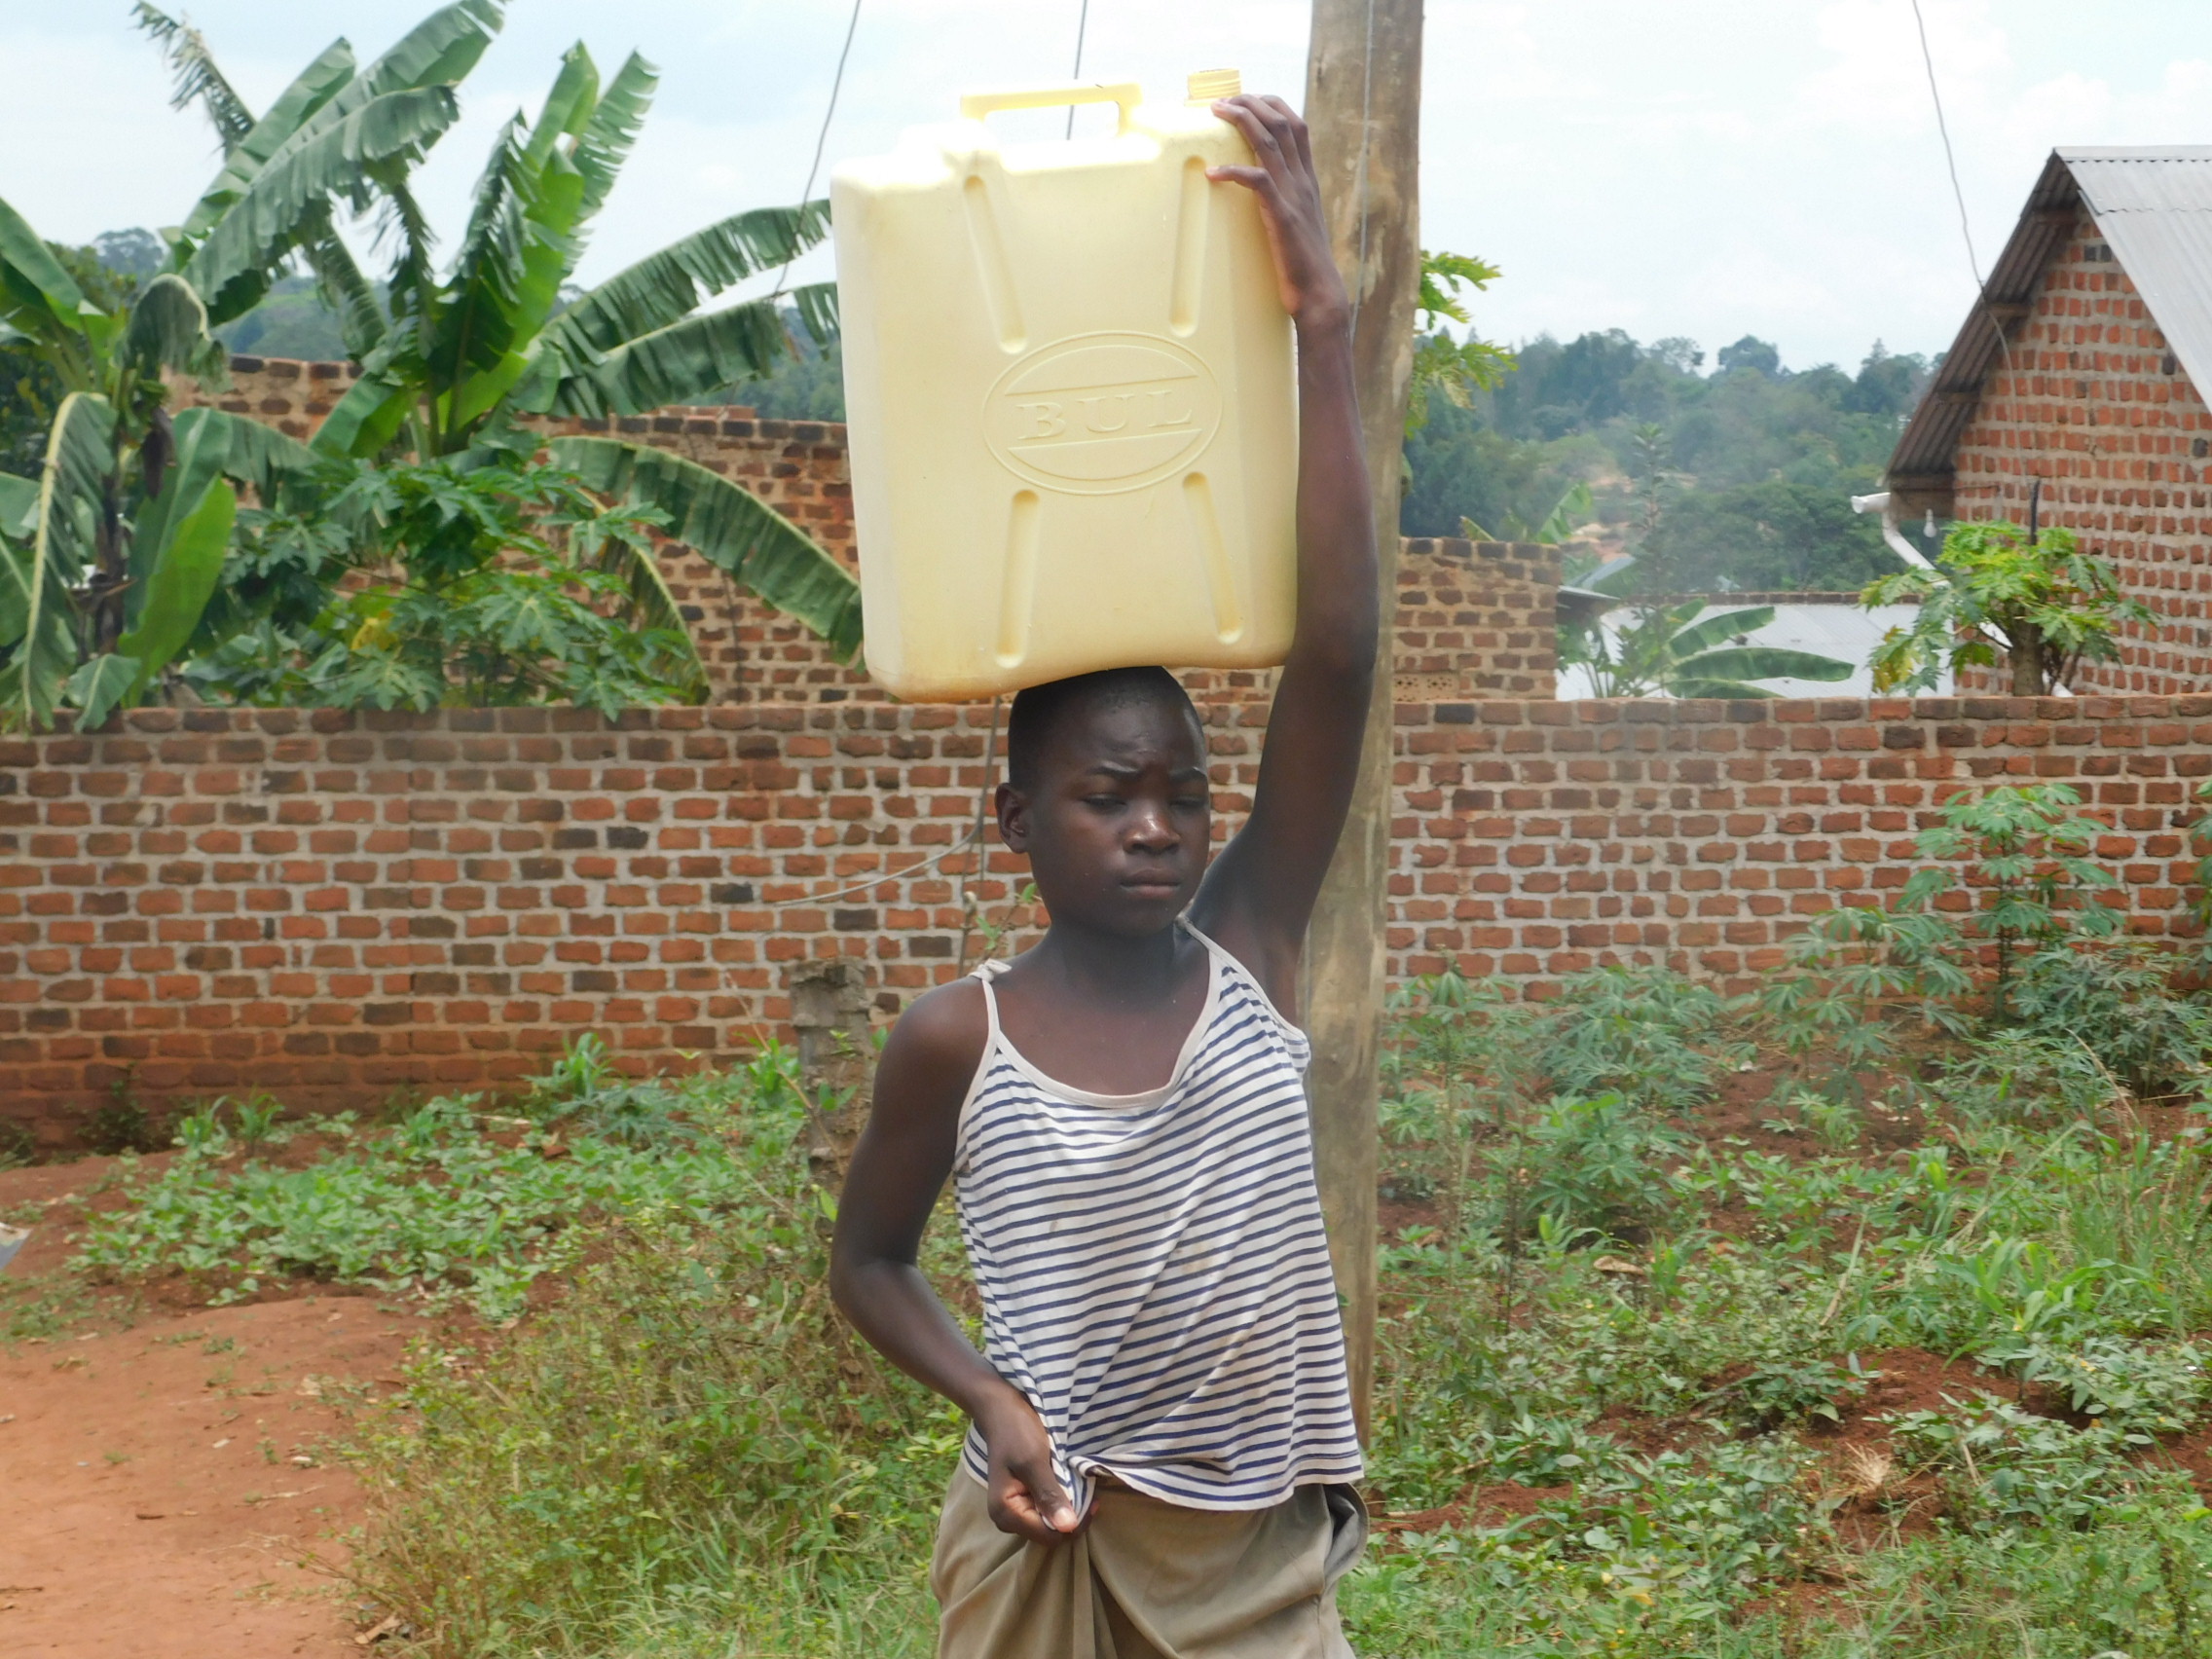 Child labor in Uganda